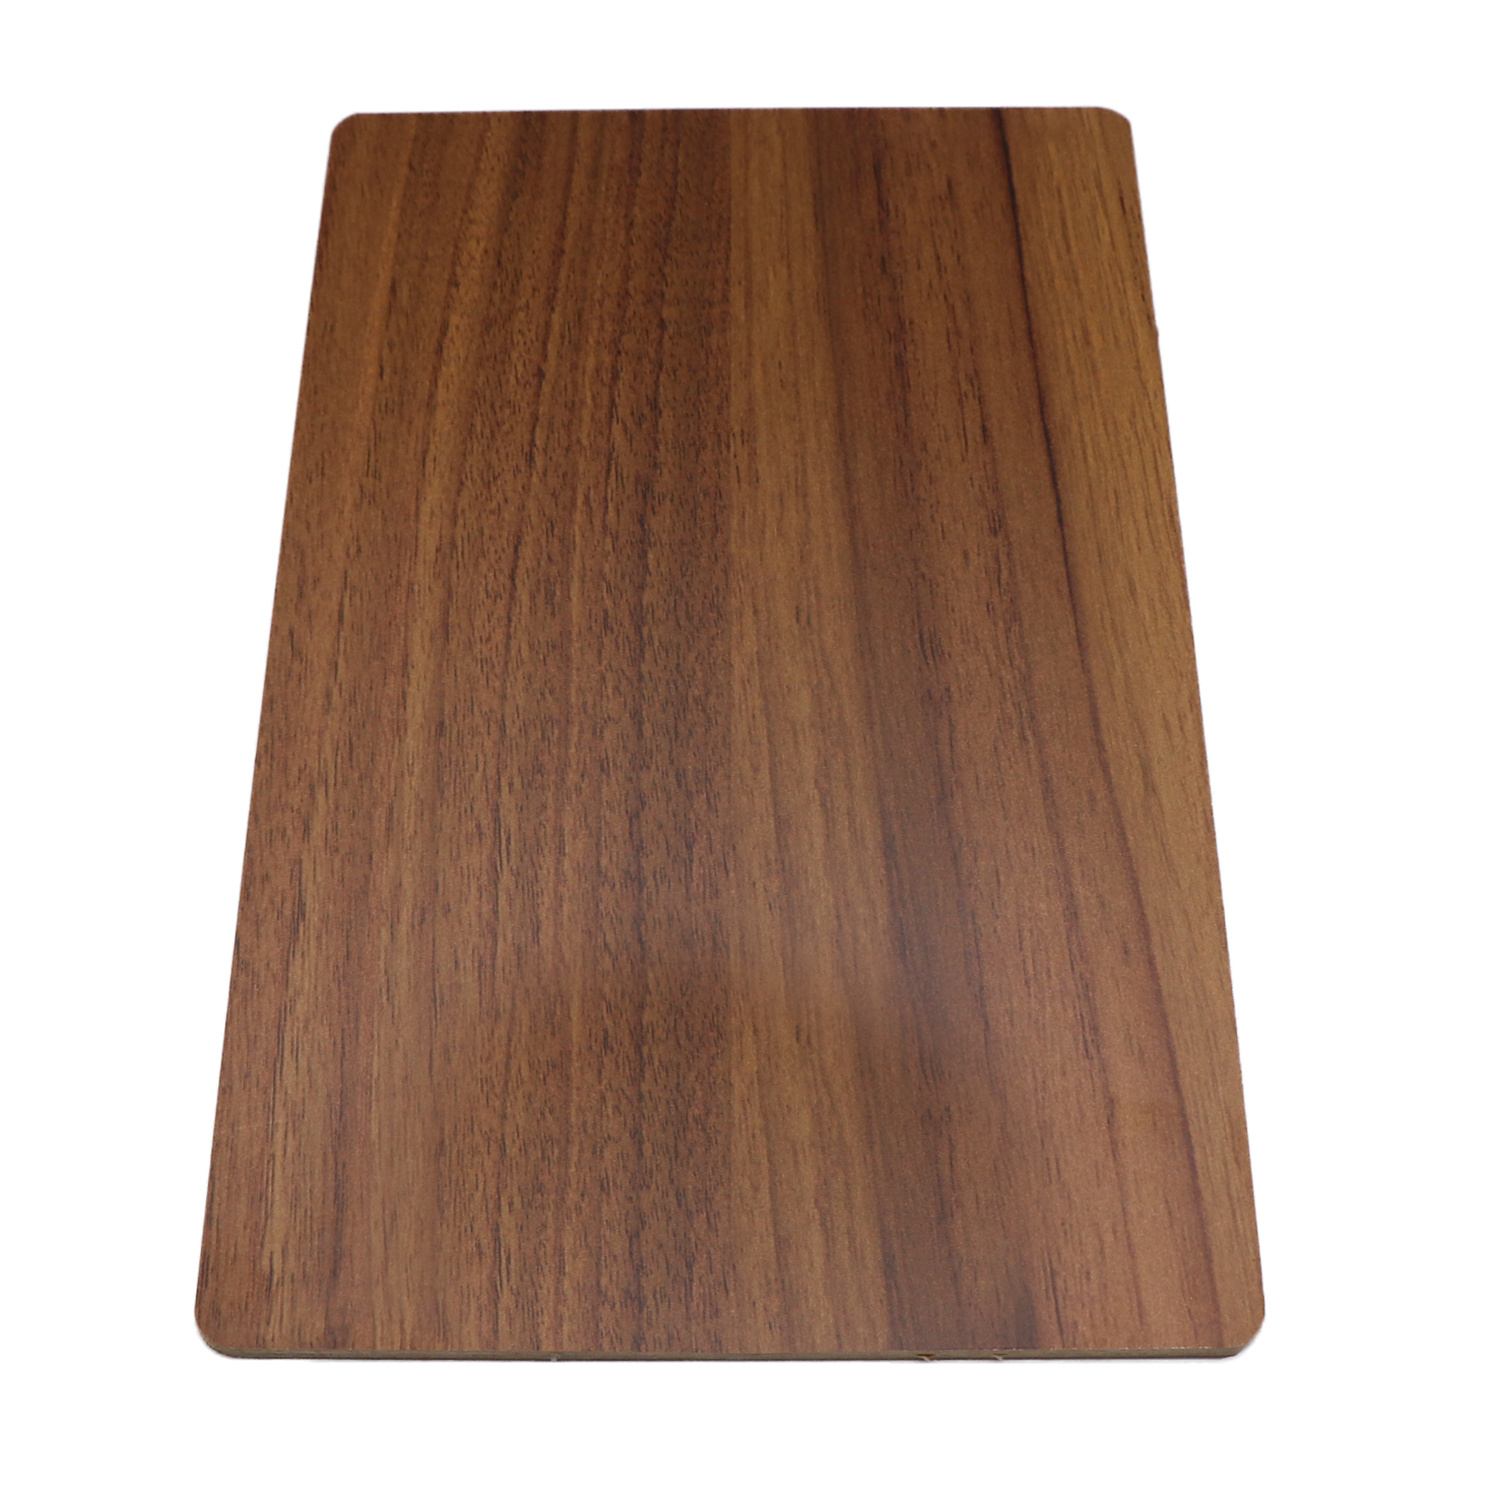 3mm 12mm 15mm 18mm Plain Raw Wood Veneer Laminated HDF MDF High Gloss Melamine Board